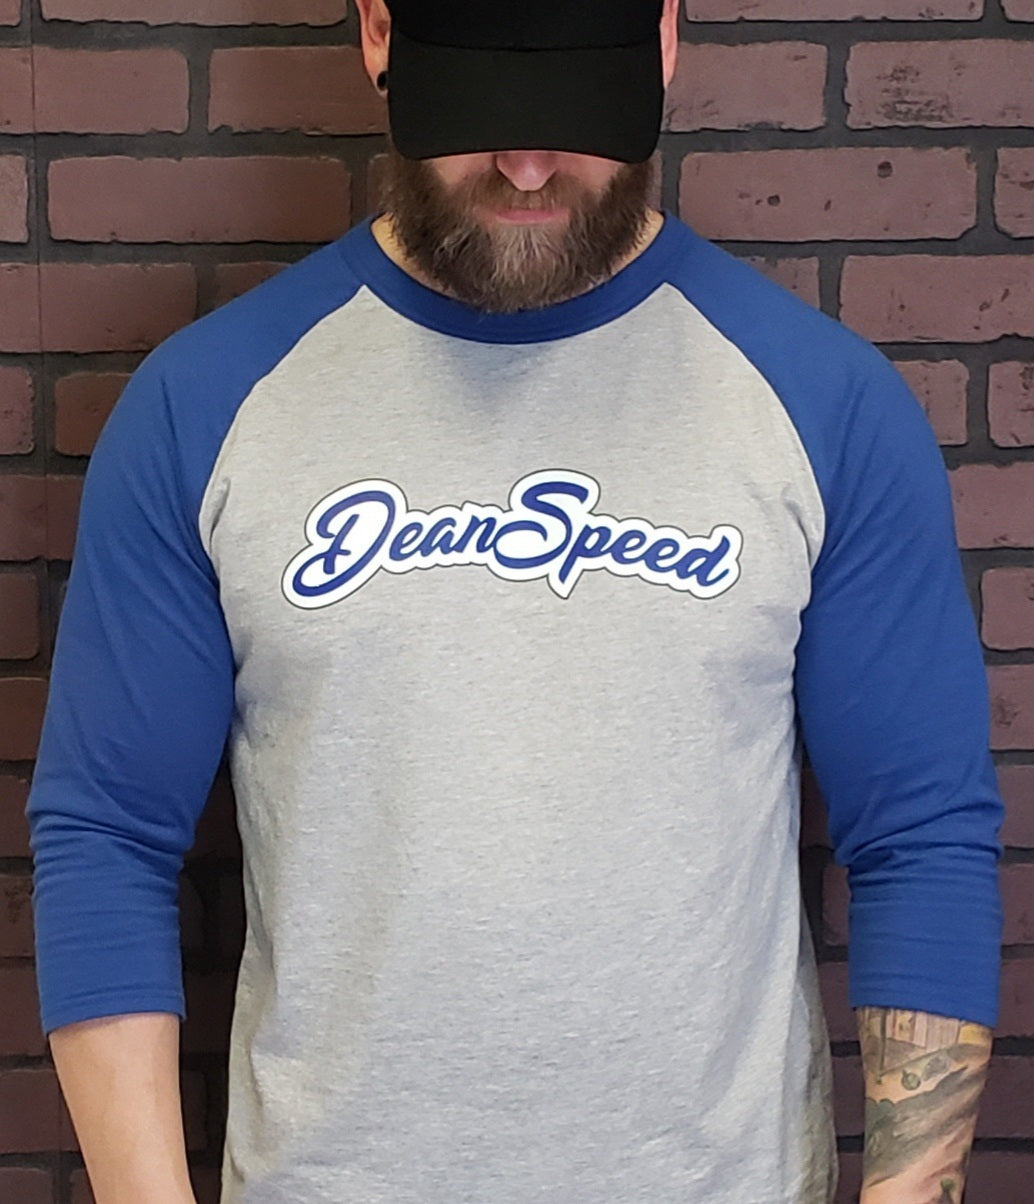 Dean Speed Baseball T - Blue